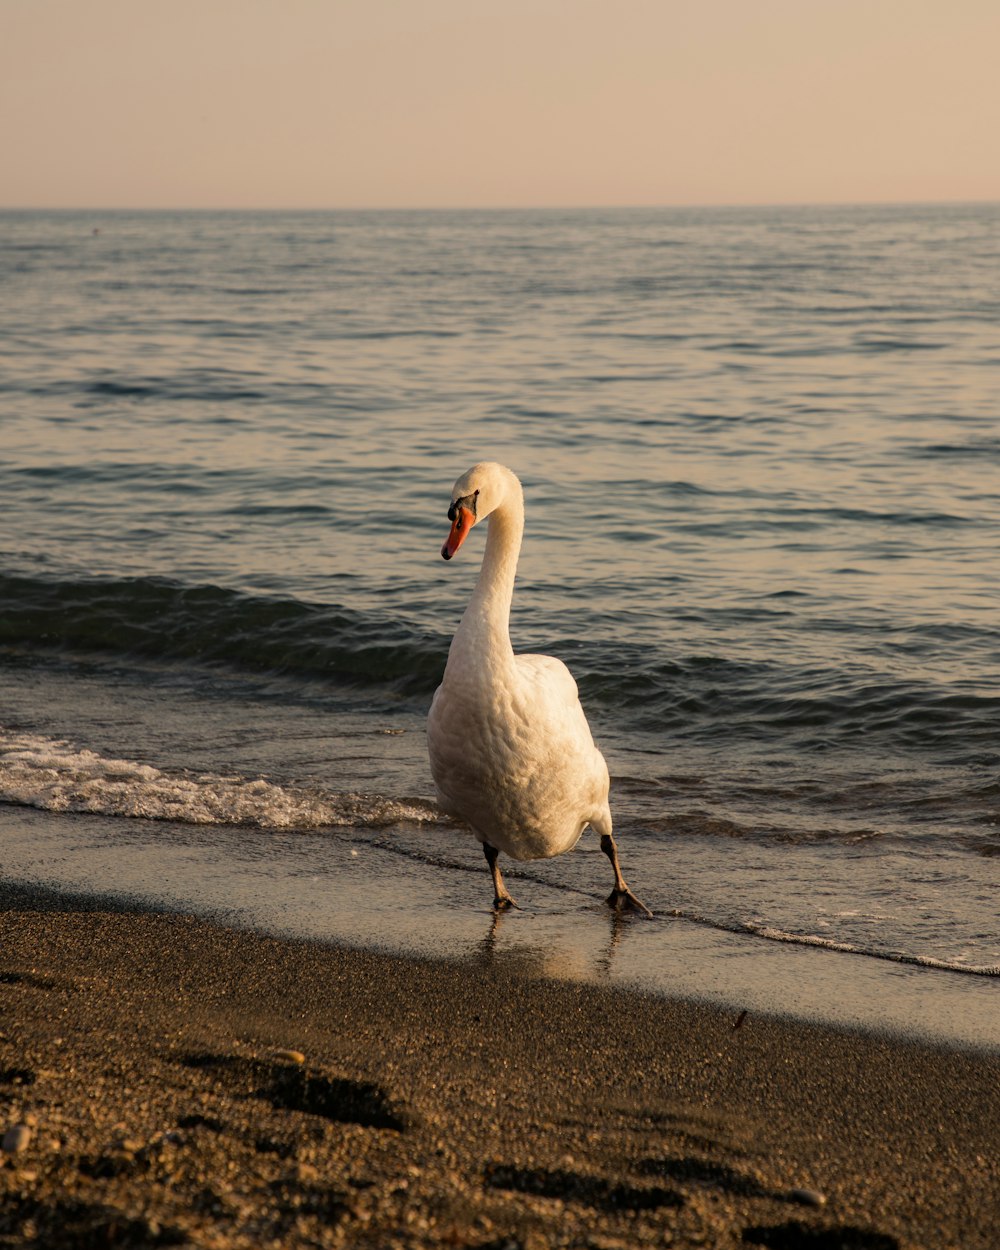 a white swan walking along a beach next to the ocean